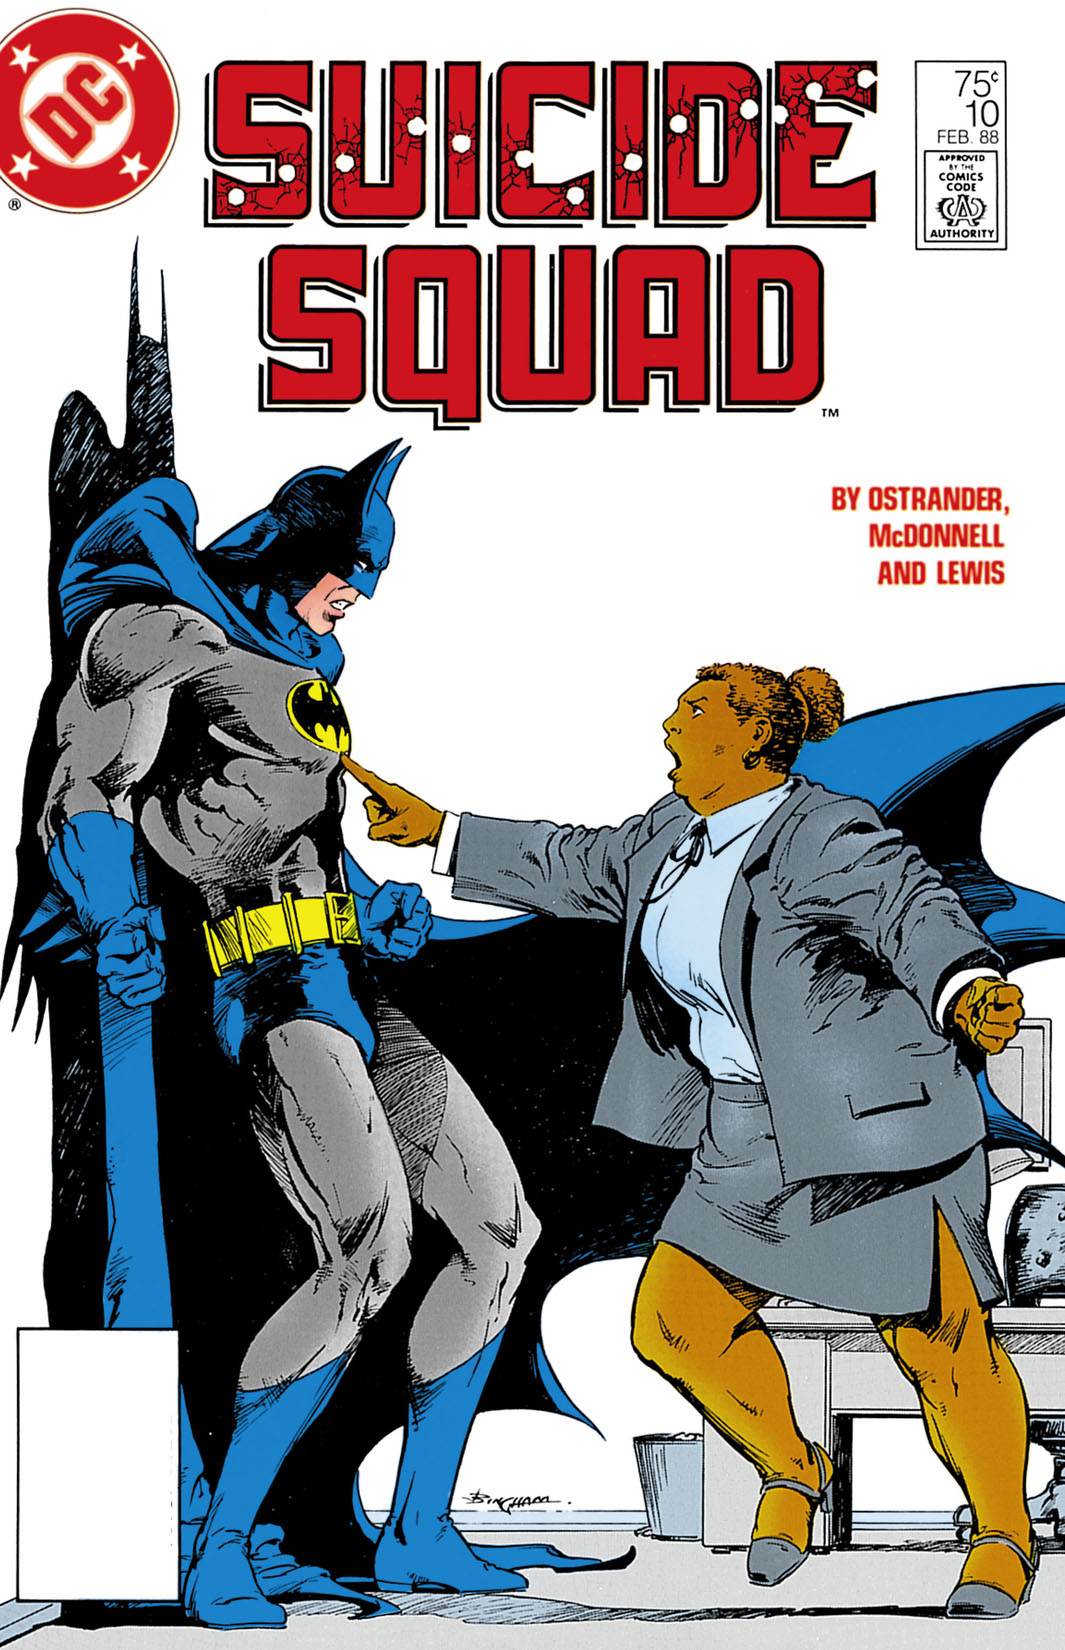 Suicide Squad (1987-) #10 preview images